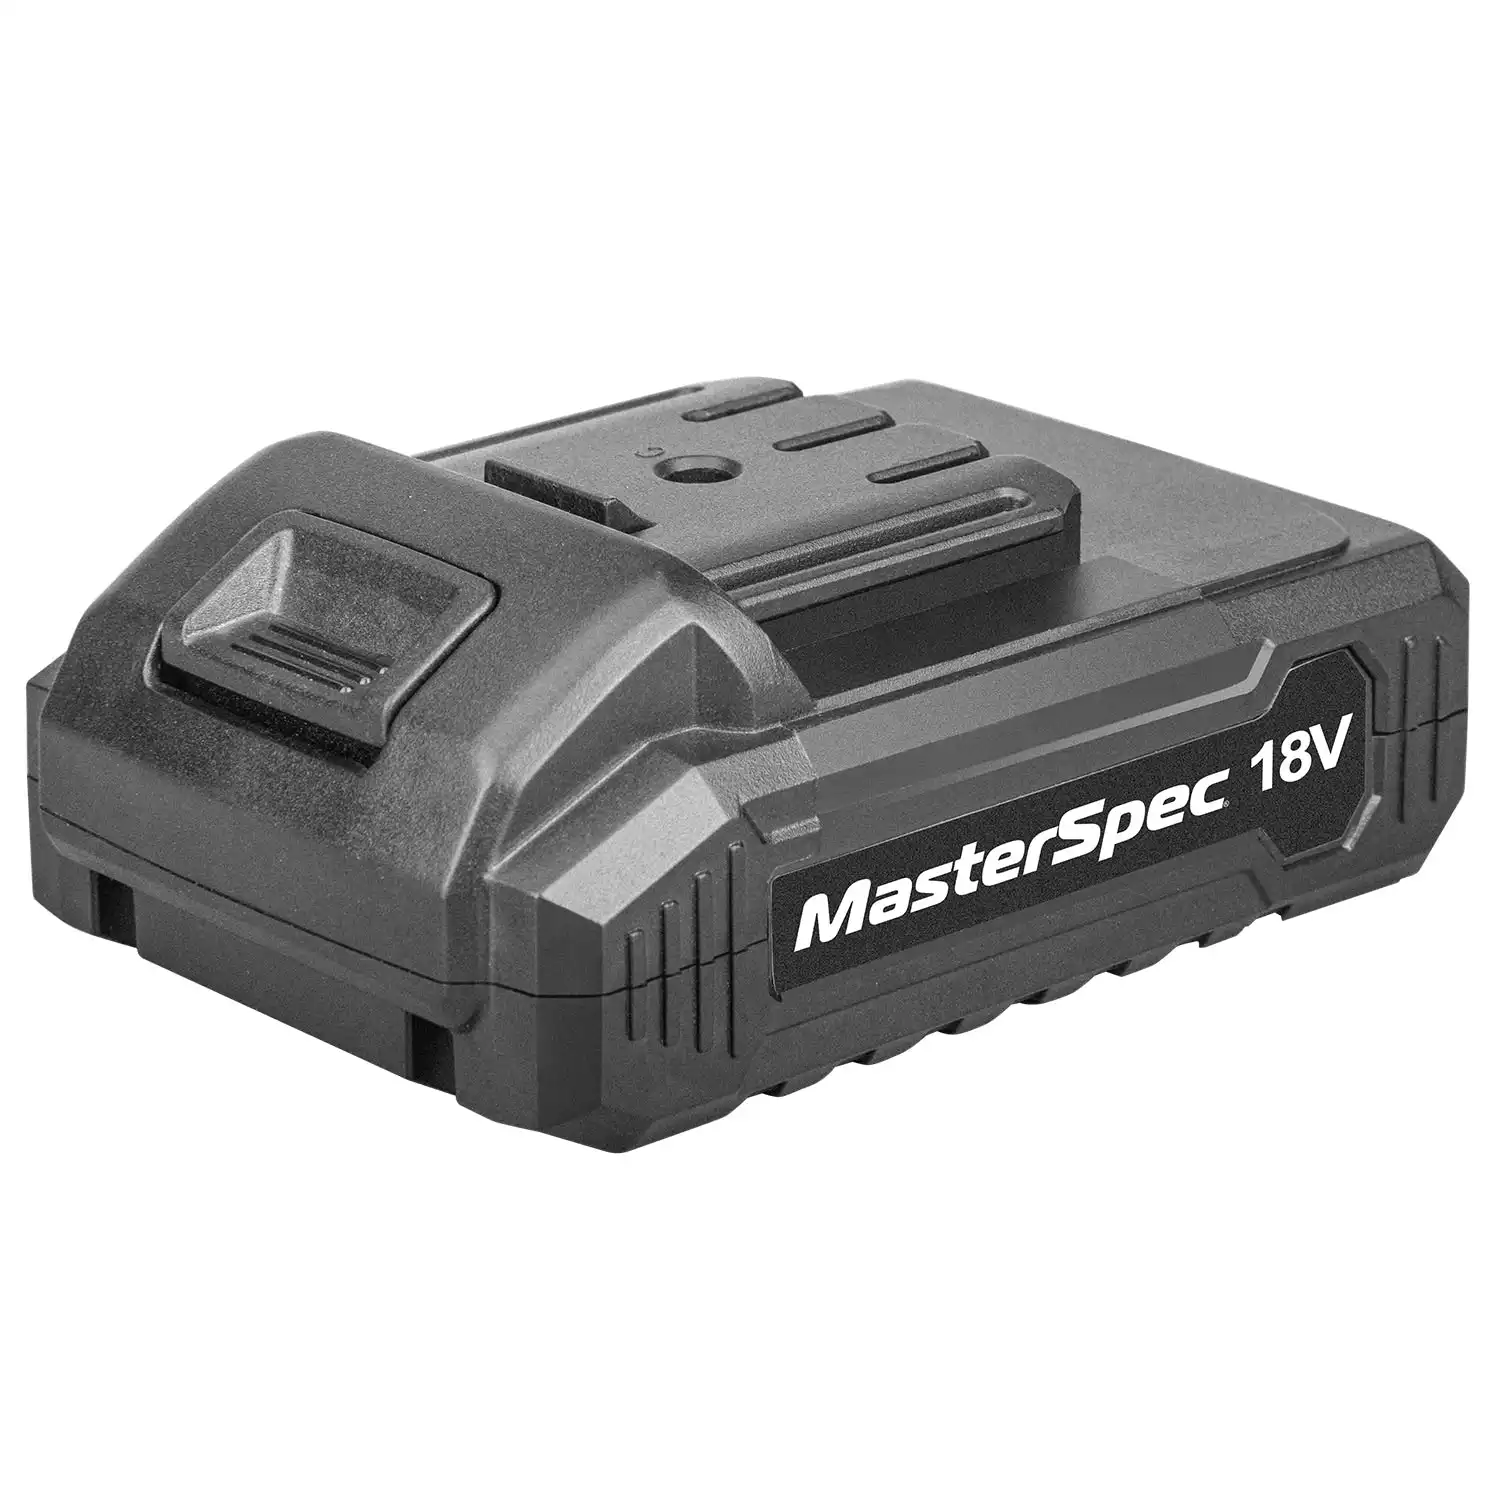 MasterSpec 18V Max 1.5Ah Lithium-Ion Battery